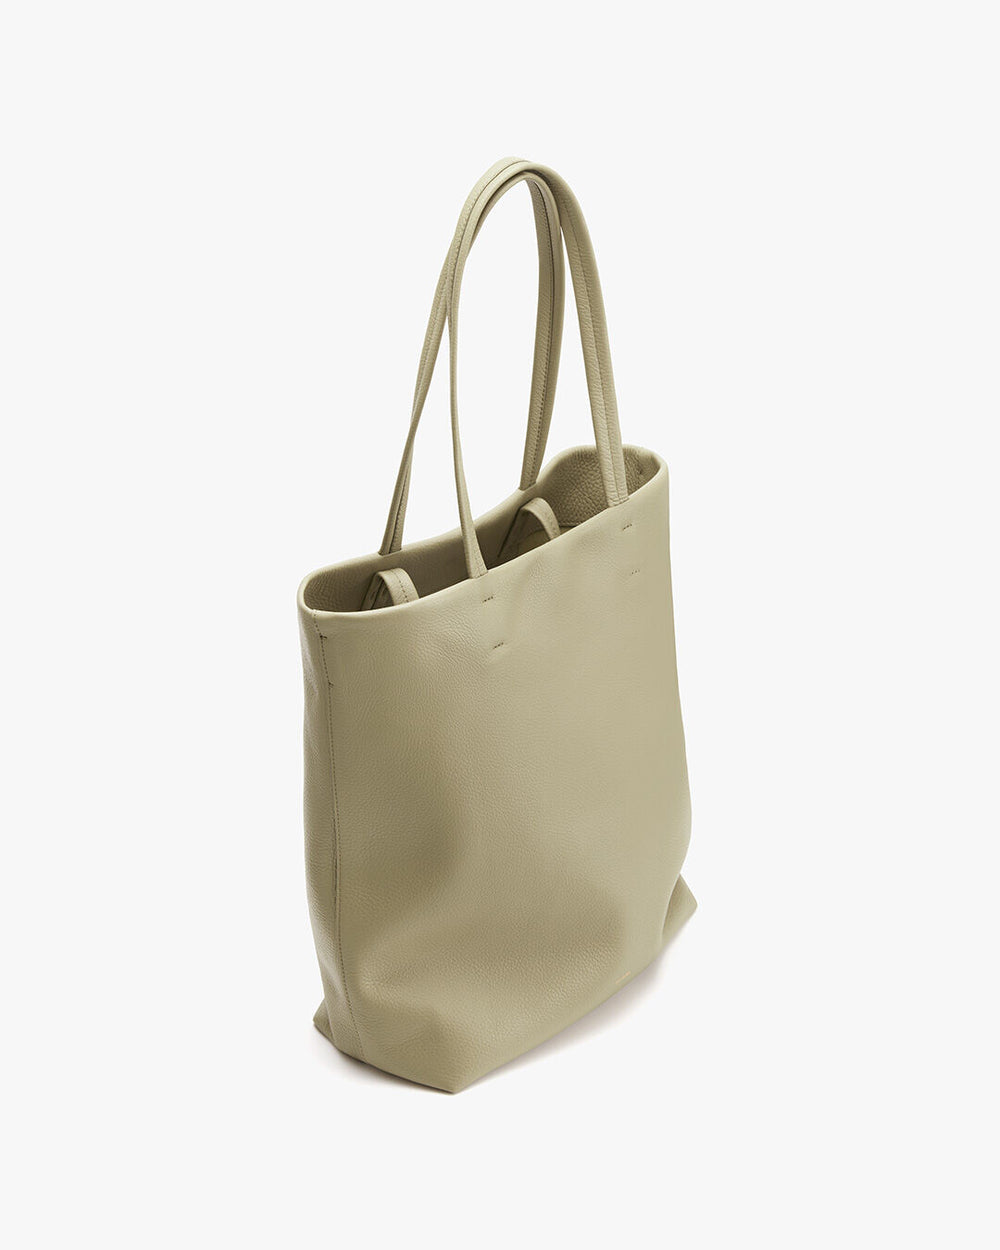 Thoughts on new Cuyana Linea bucket bag? : r/handbags